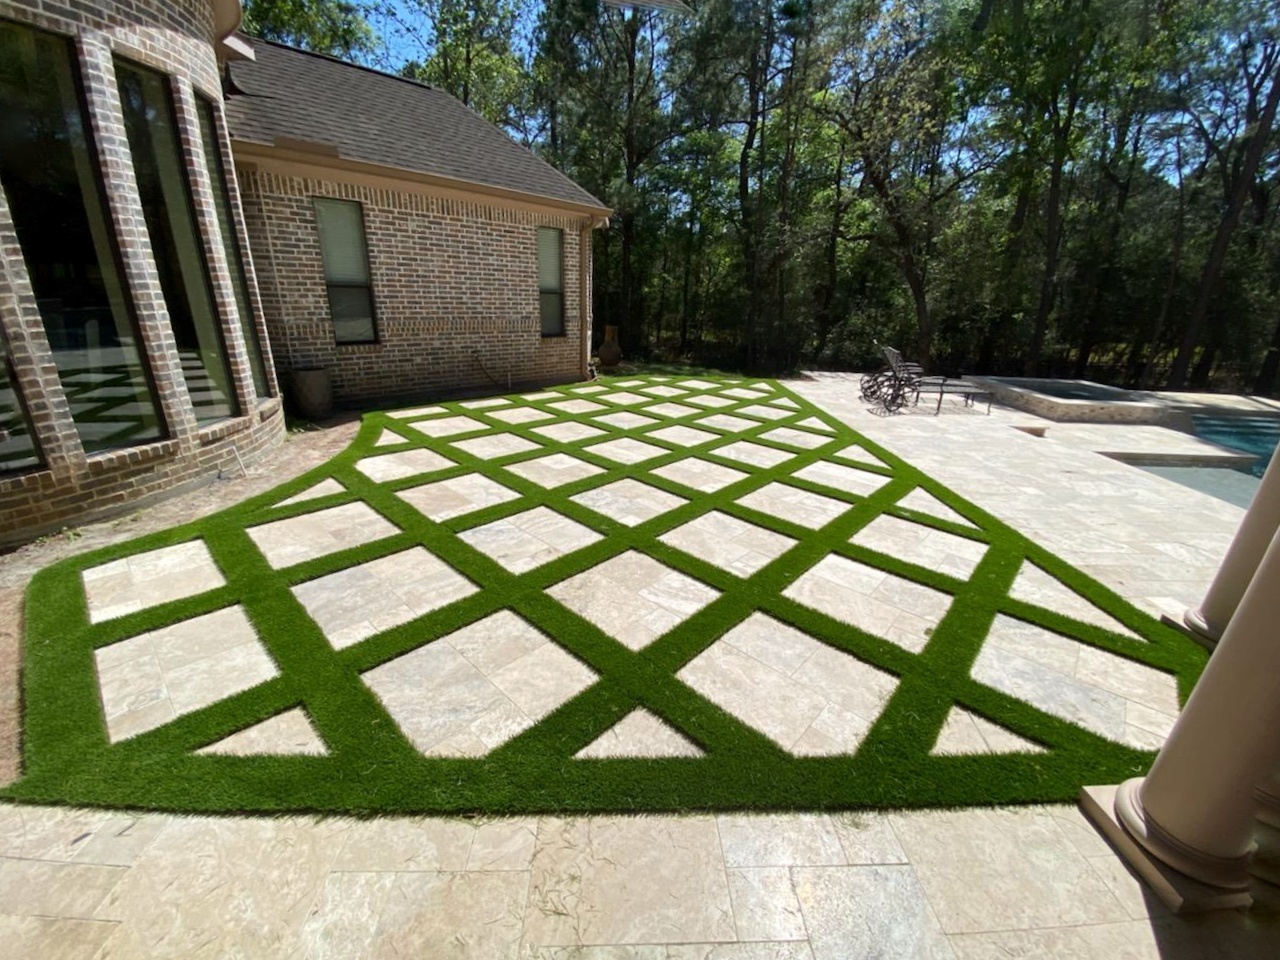 A symmetrical turf design